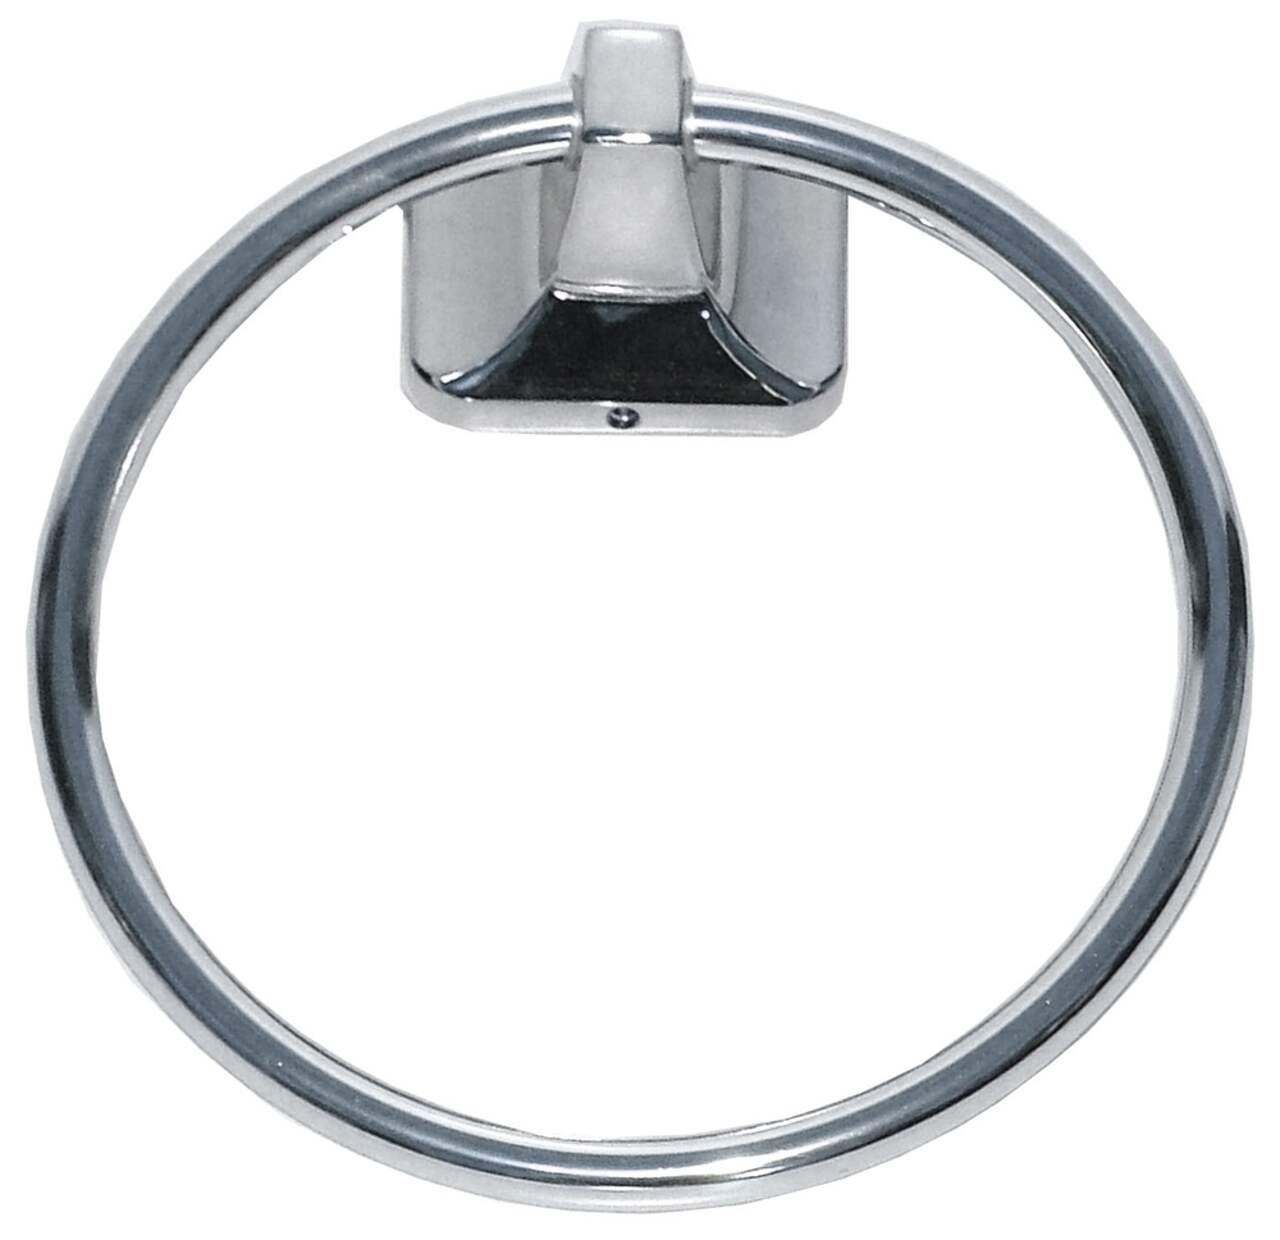 G Decor Chrome Bathroom Accessories Towel Ring Holder, Toilet Roll Holder,  Towel Robe Hook -  Canada